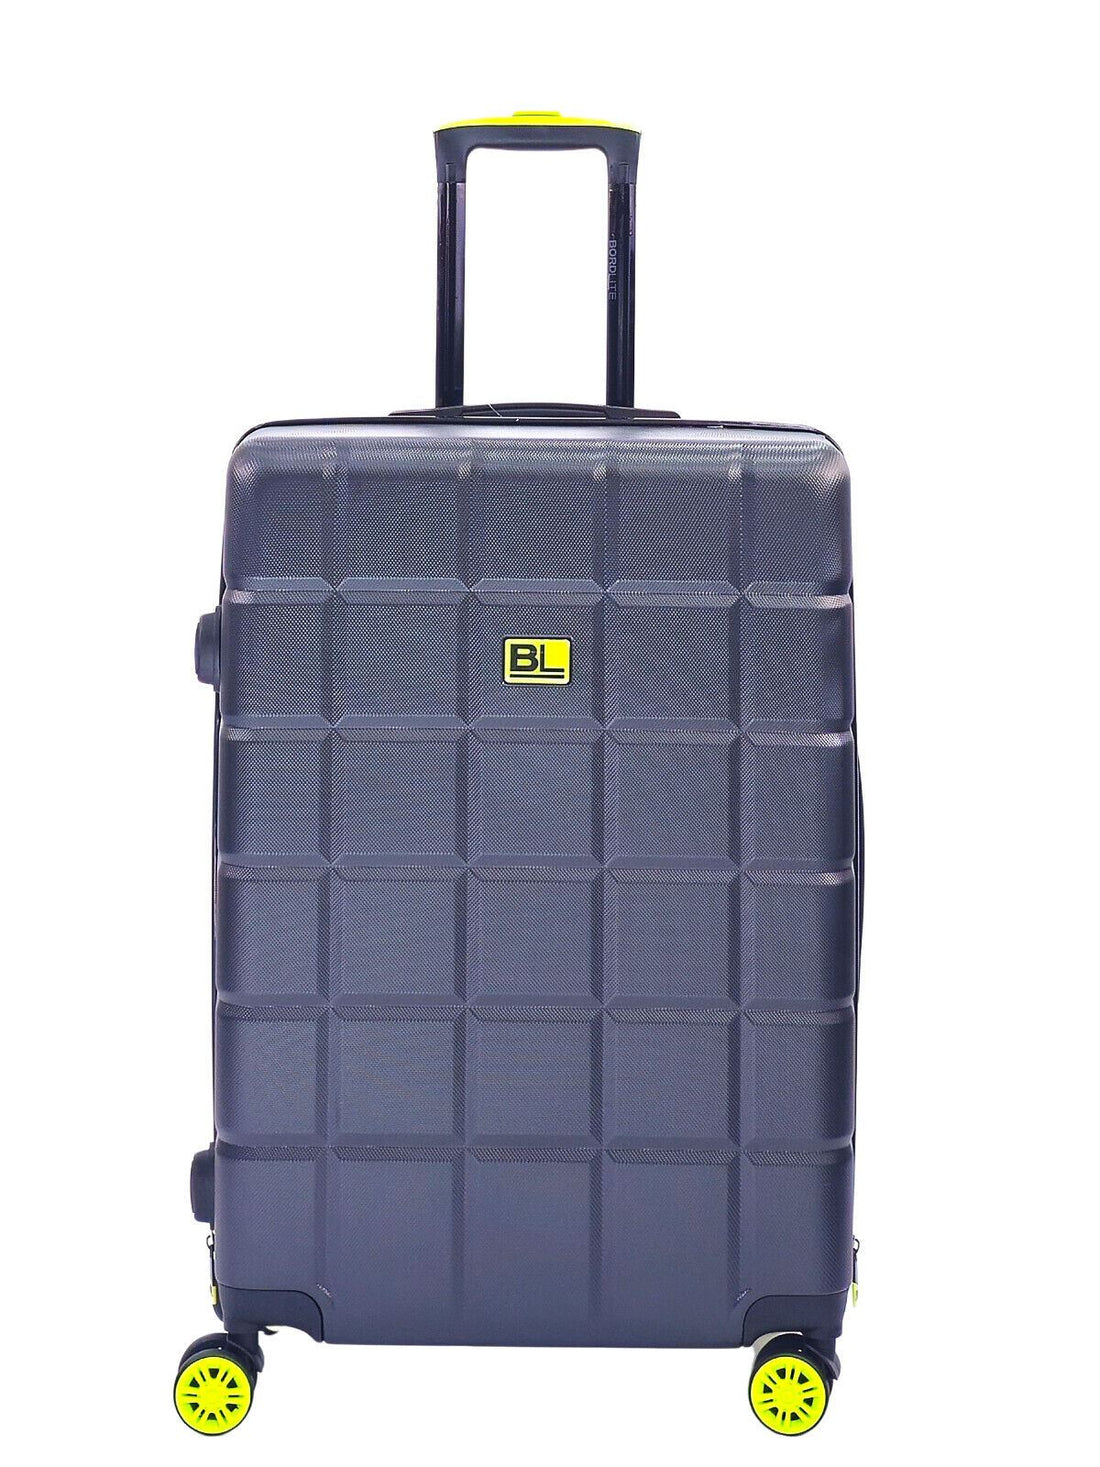 Collinsville Medium Soft Shell Suitcase in Grey